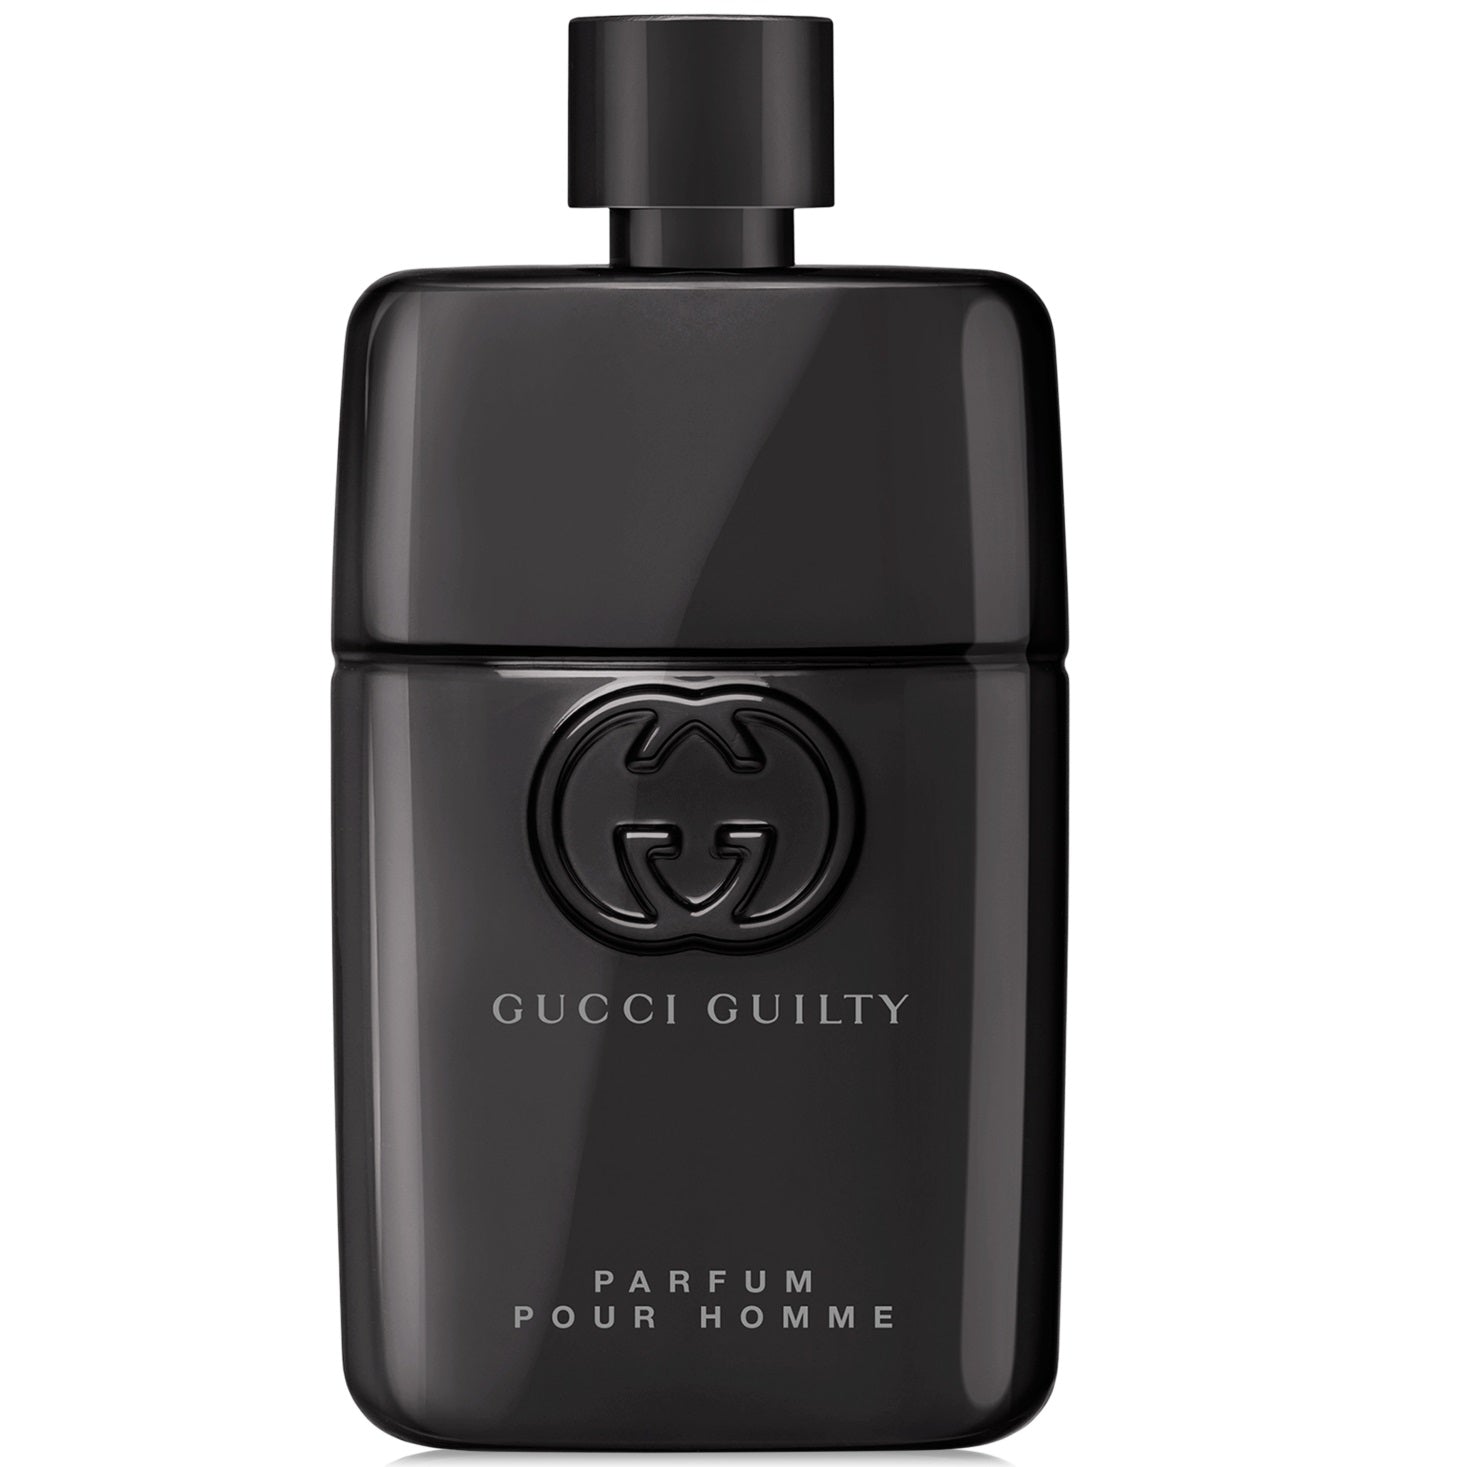 Gucci Guilty Parfum Pour Homme Spray 90ml - Feel Gorgeous